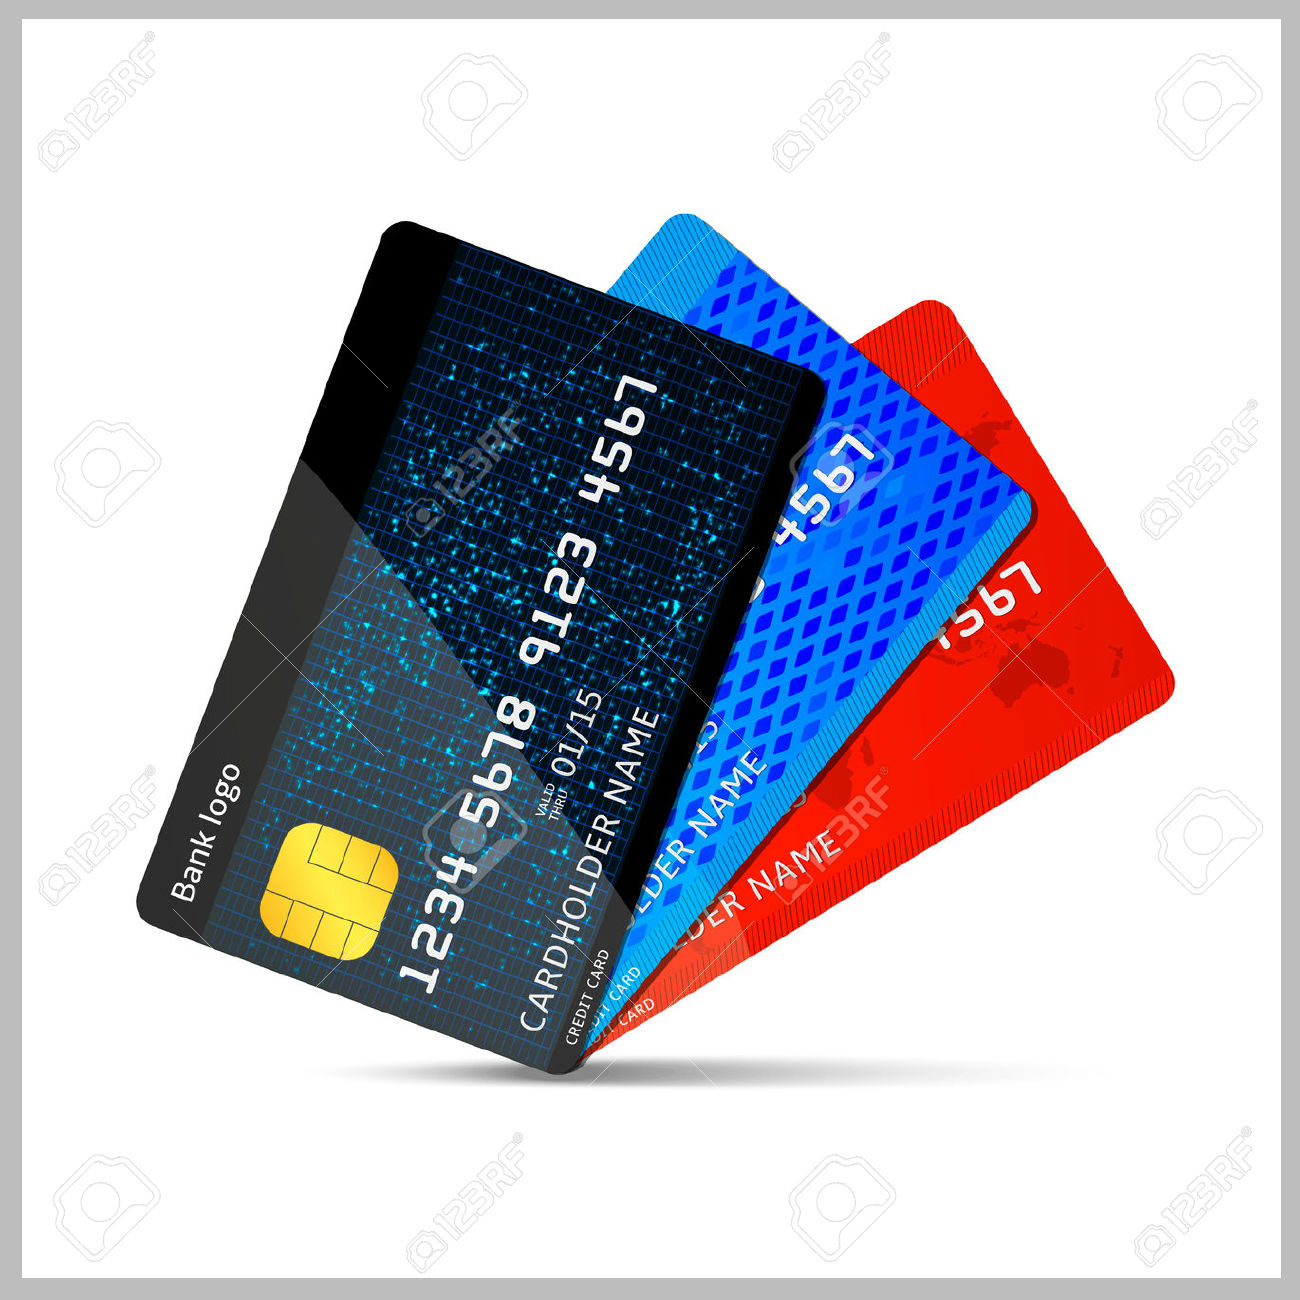 10 Credit Card Designs | Free & Premium Templates